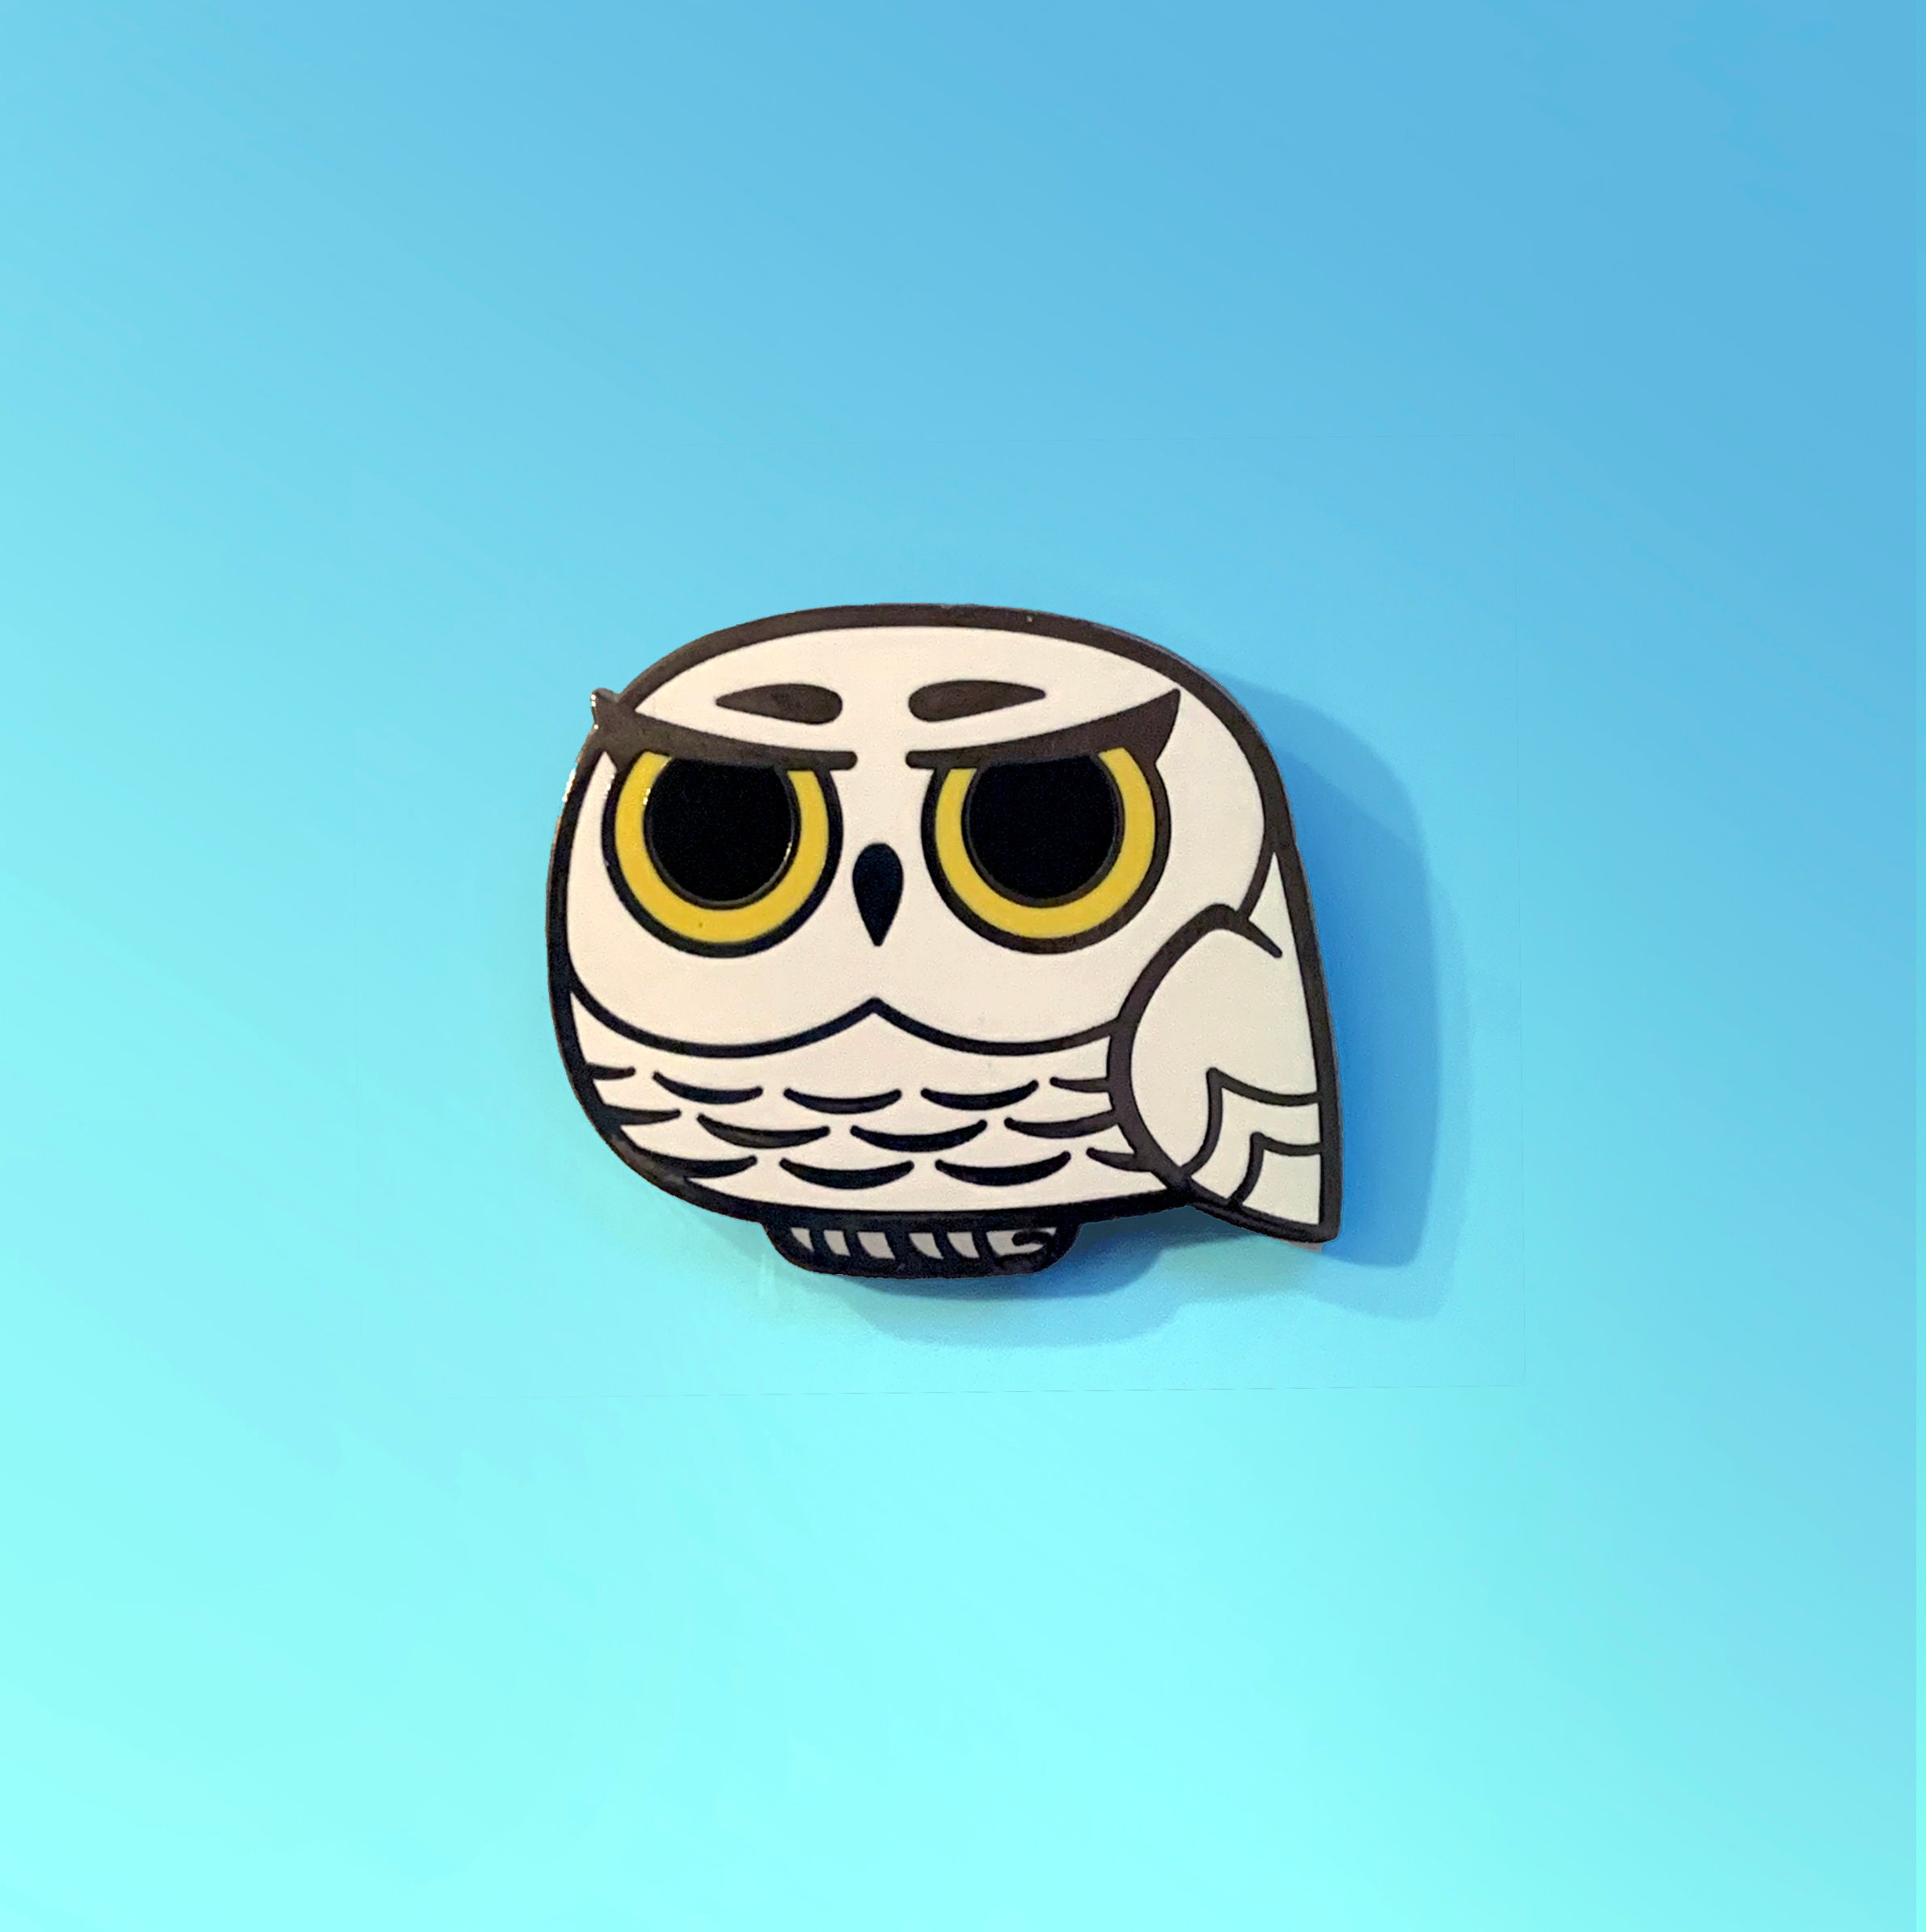 Grumpy Owl Enamel Pin - White Snowy Owl Pin